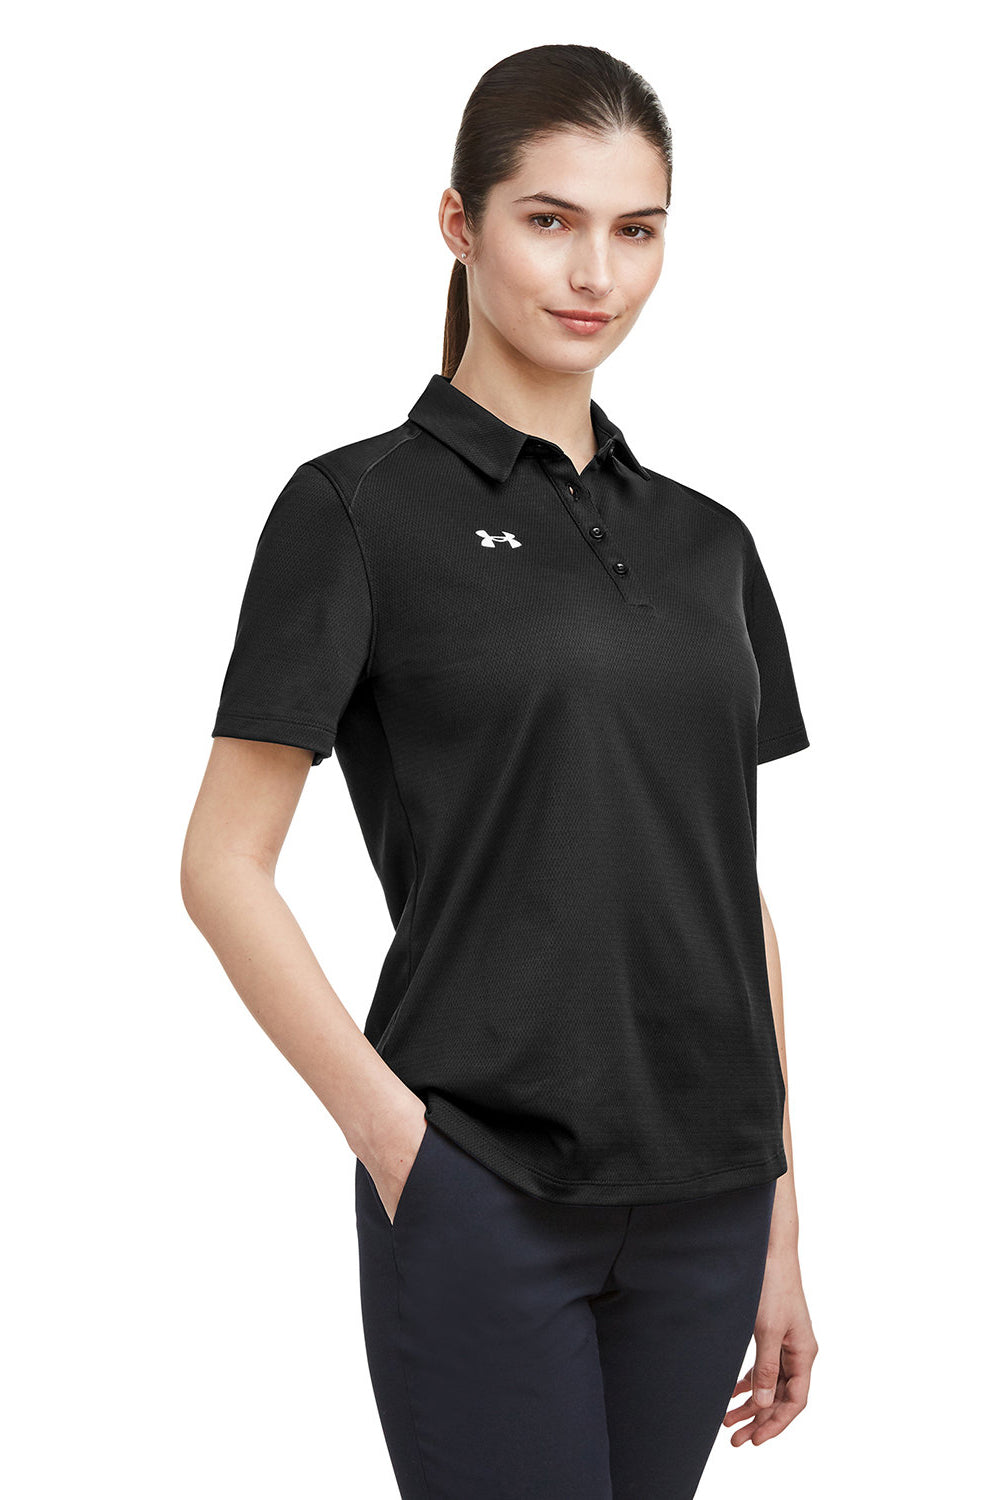 Under Armour 1370431 Womens Tech Moisture Wicking Short Sleeve Polo Shirt Black Model 3Q